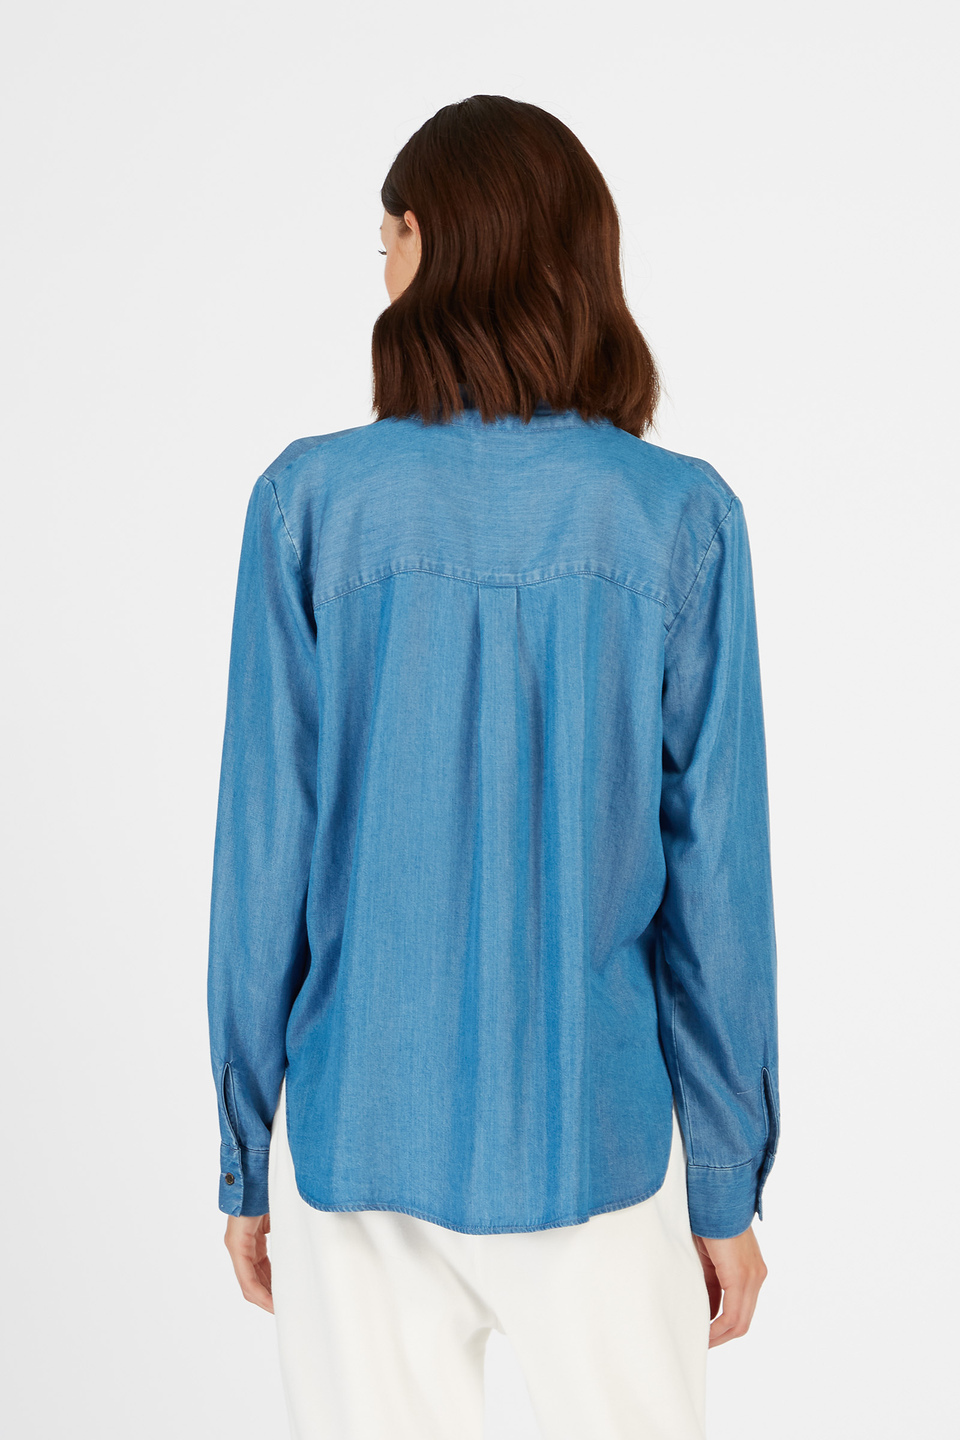 Argentina women’s shirt in lyocell regular fit long sleeves | La Martina - Official Online Shop